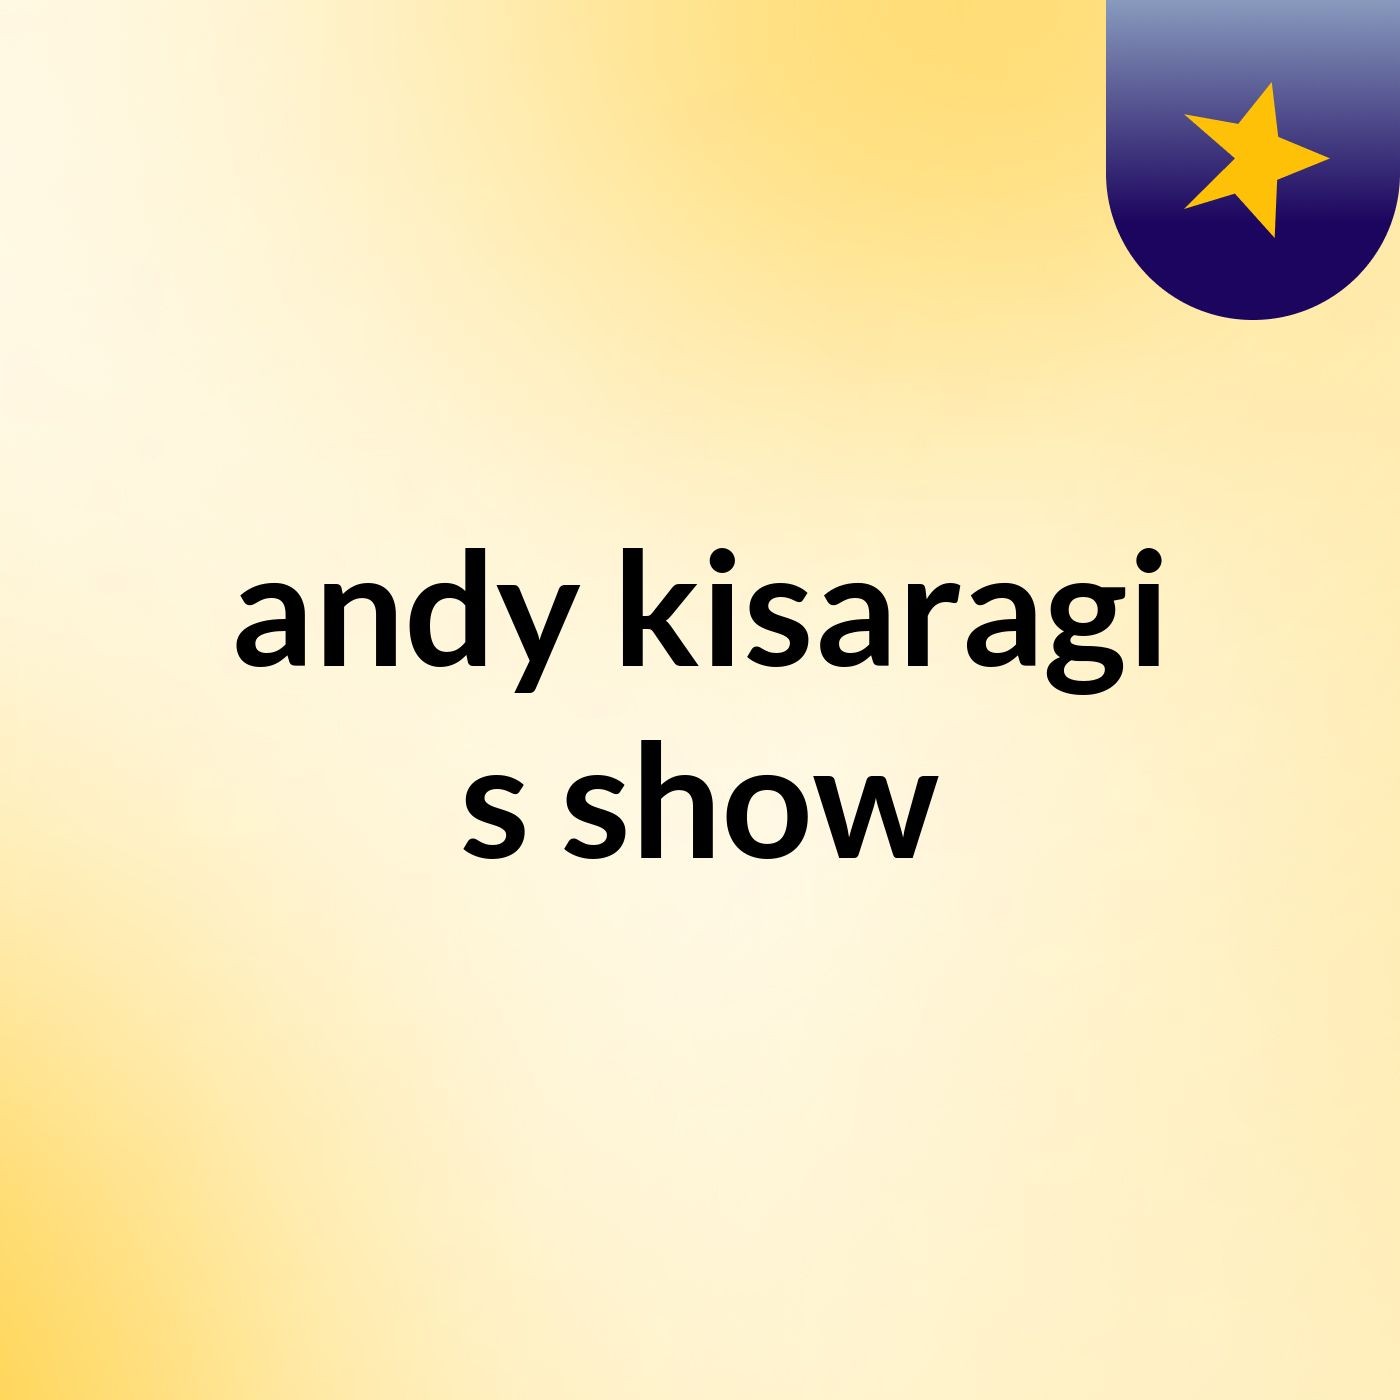 andy kisaragi's show